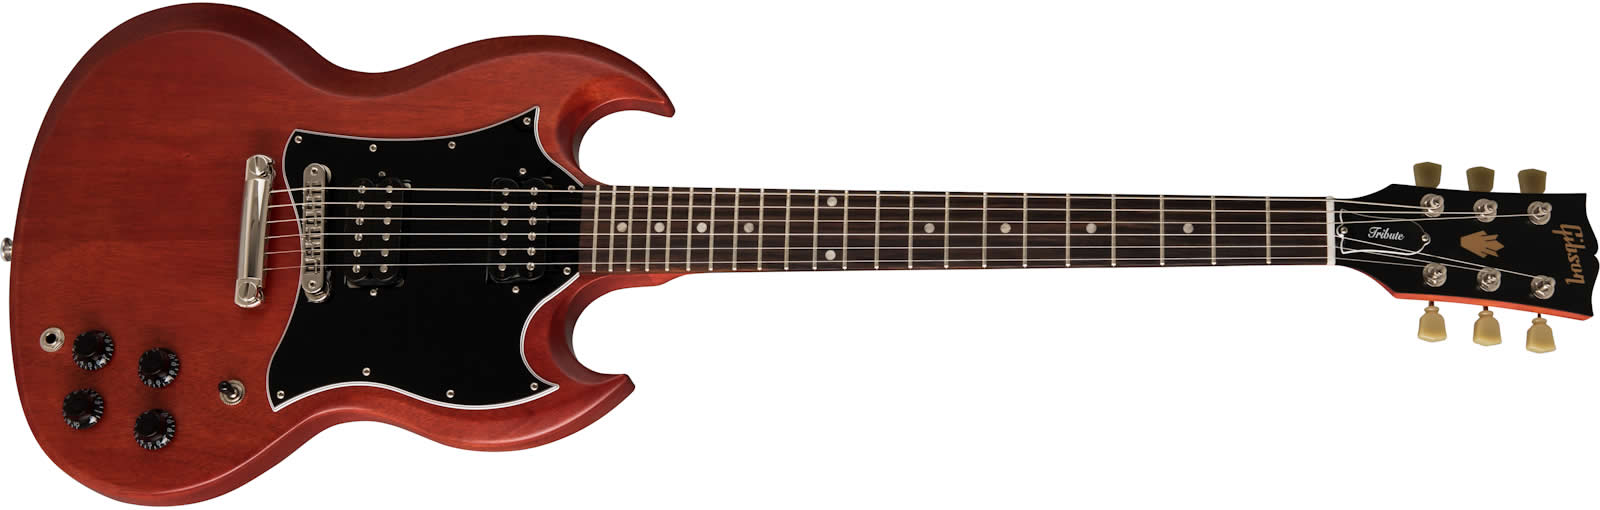 Gibson USA SG Standard ギブソンSG